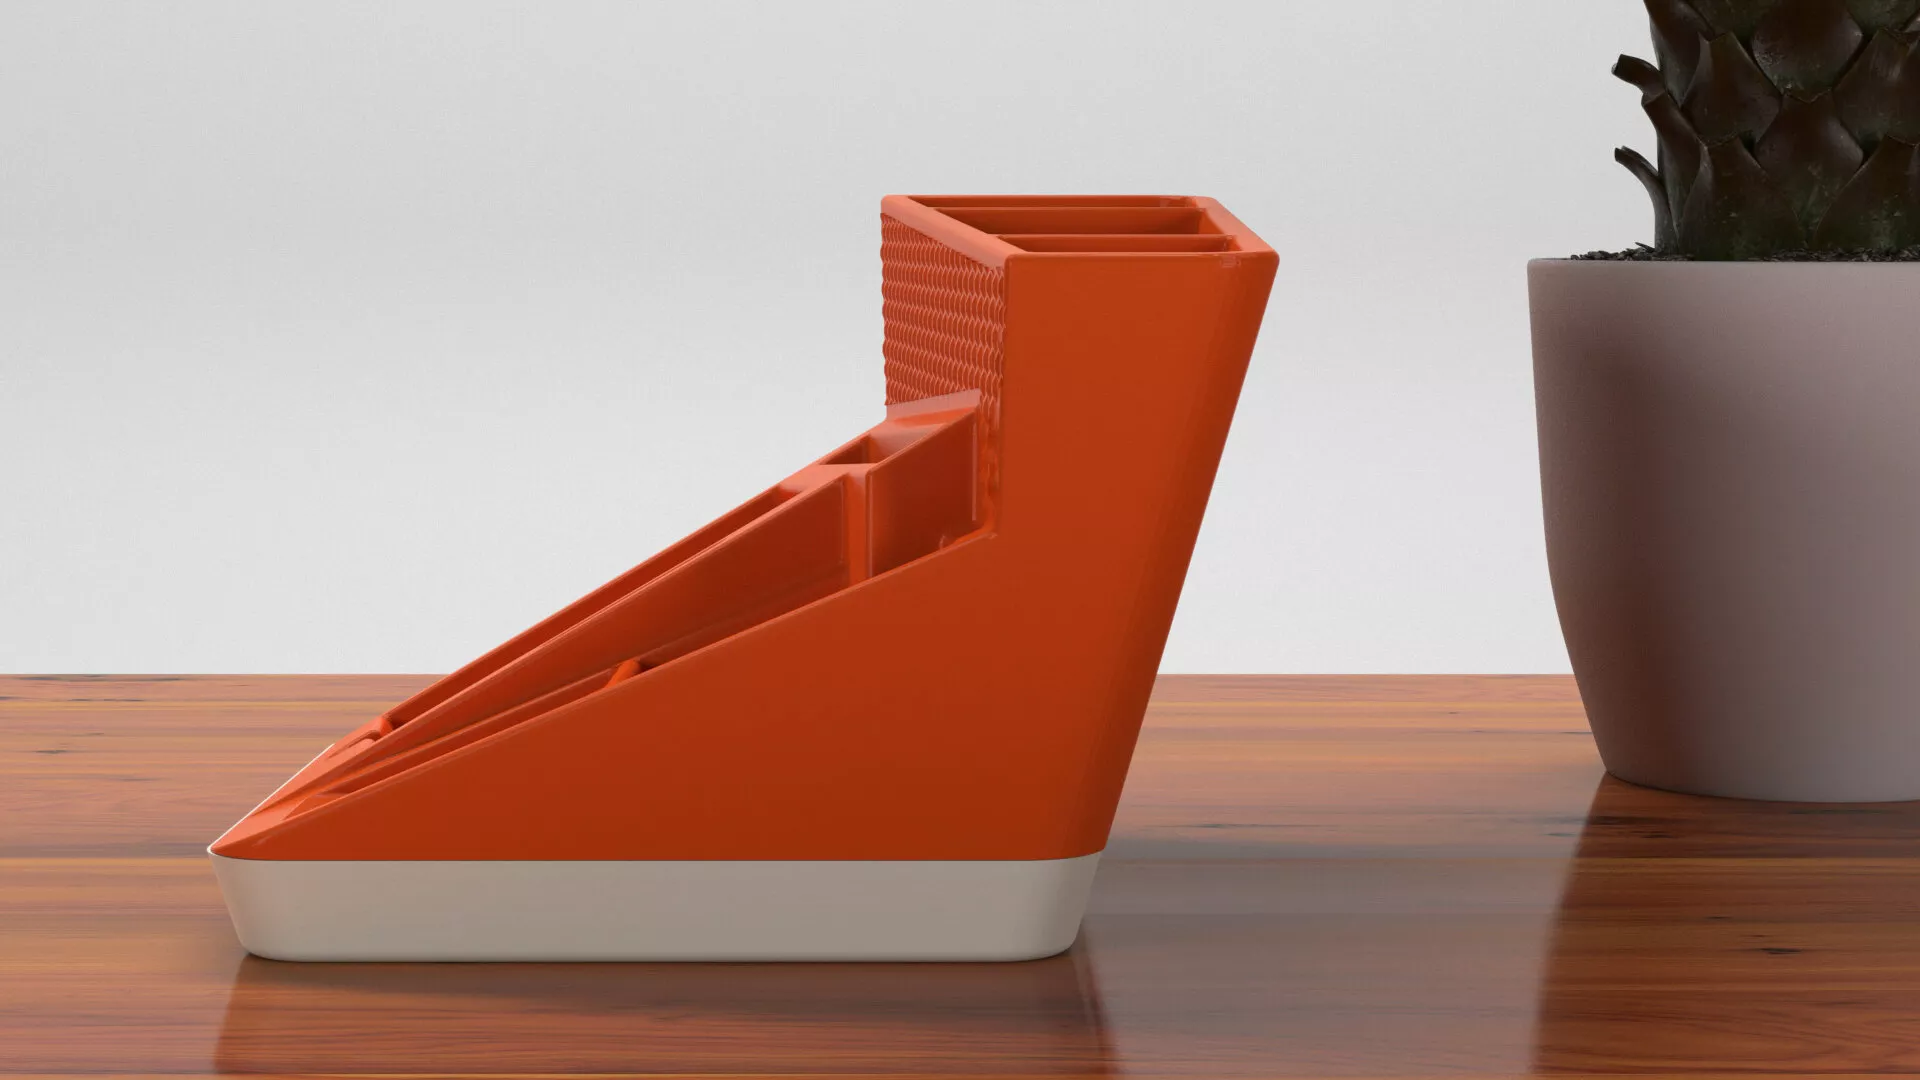 GoEngineer Community 3D printing design content winner, Bring Back the Cool Desk Organizer render side view